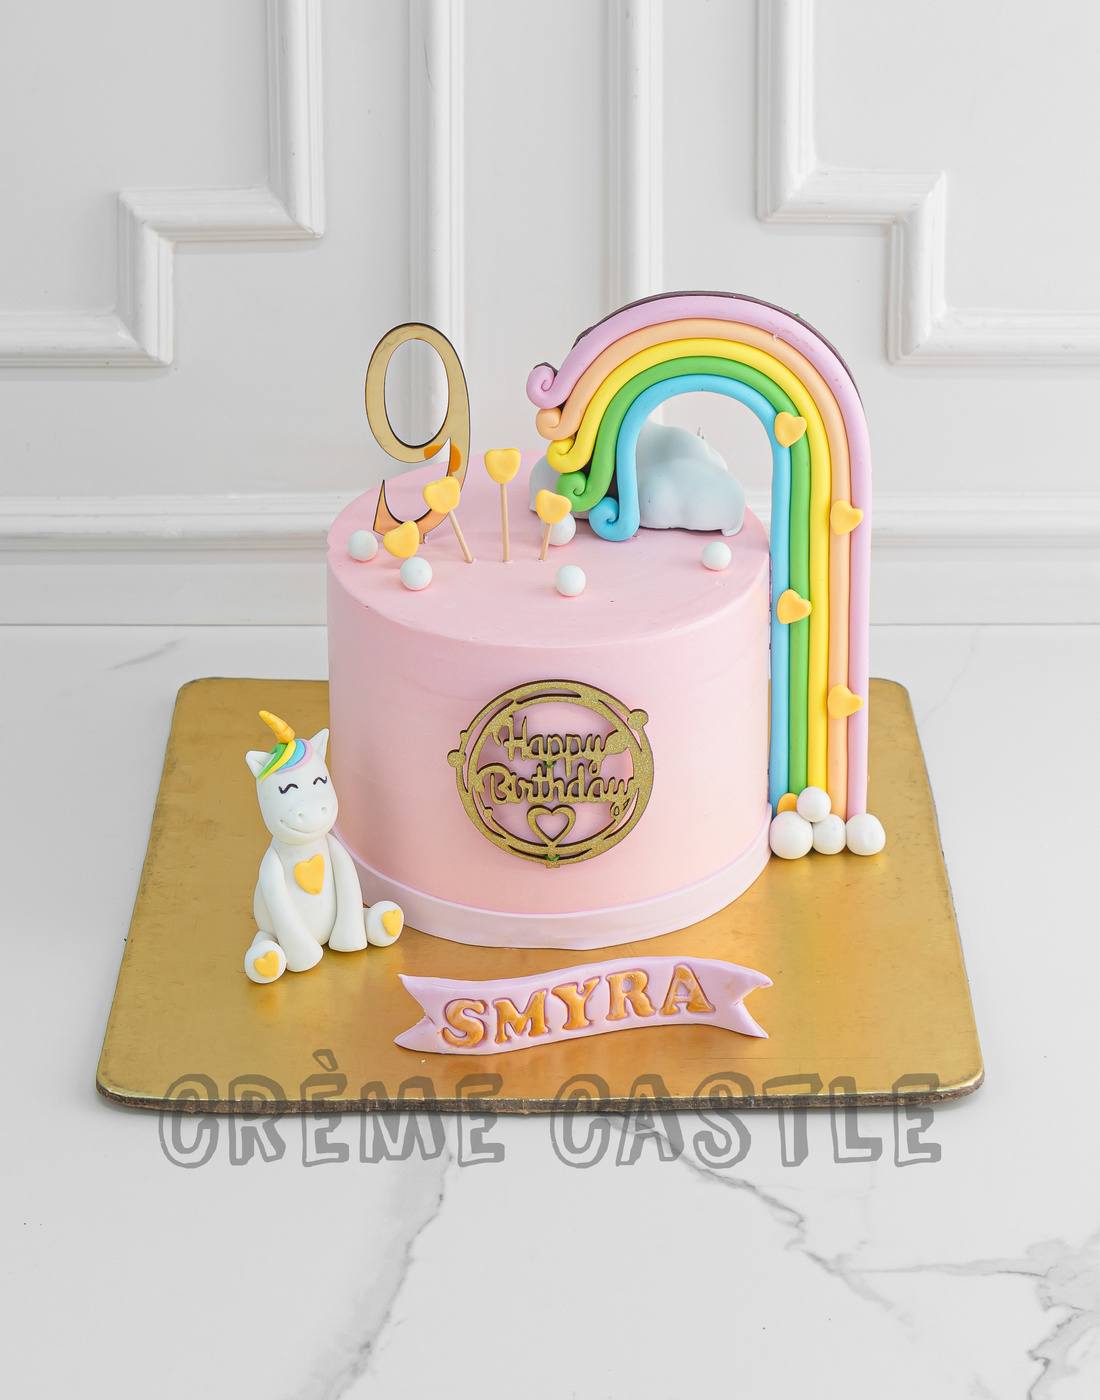 Rainbow Pony Cake